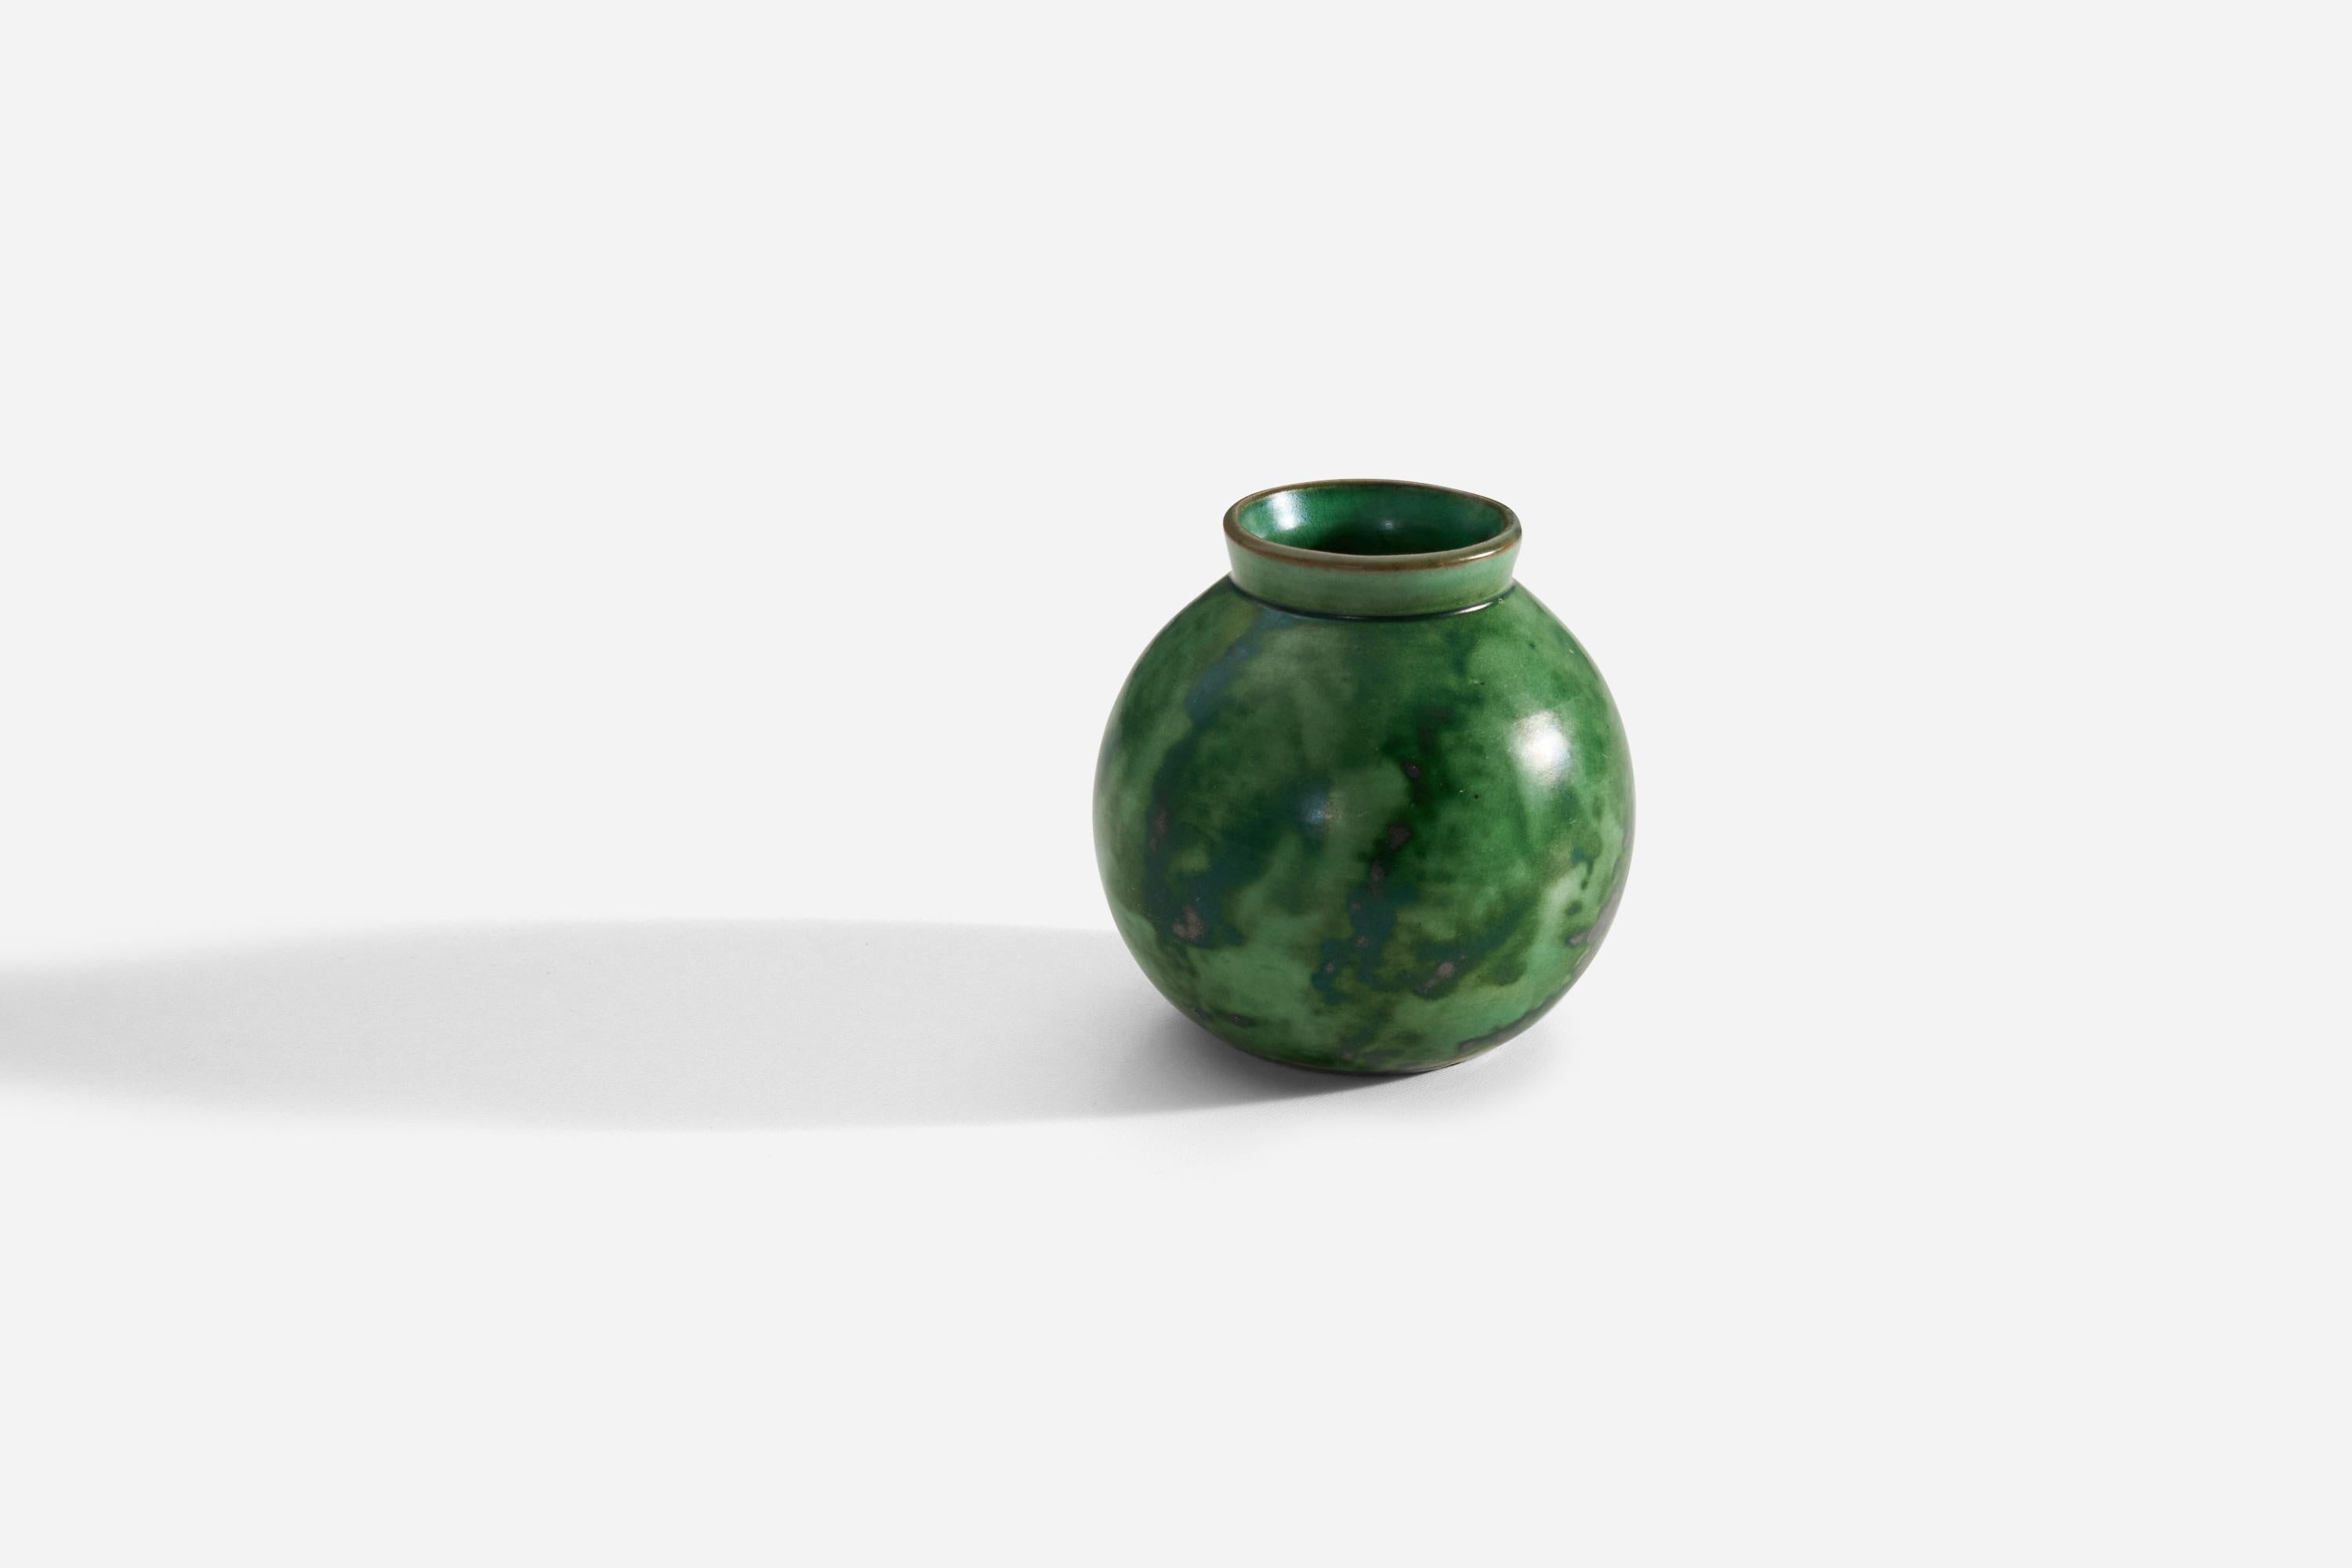 A green-glazed earthenware ceramic vase by Erik Mornils for Nittsjö. Produced in Sweden, 1940s.

